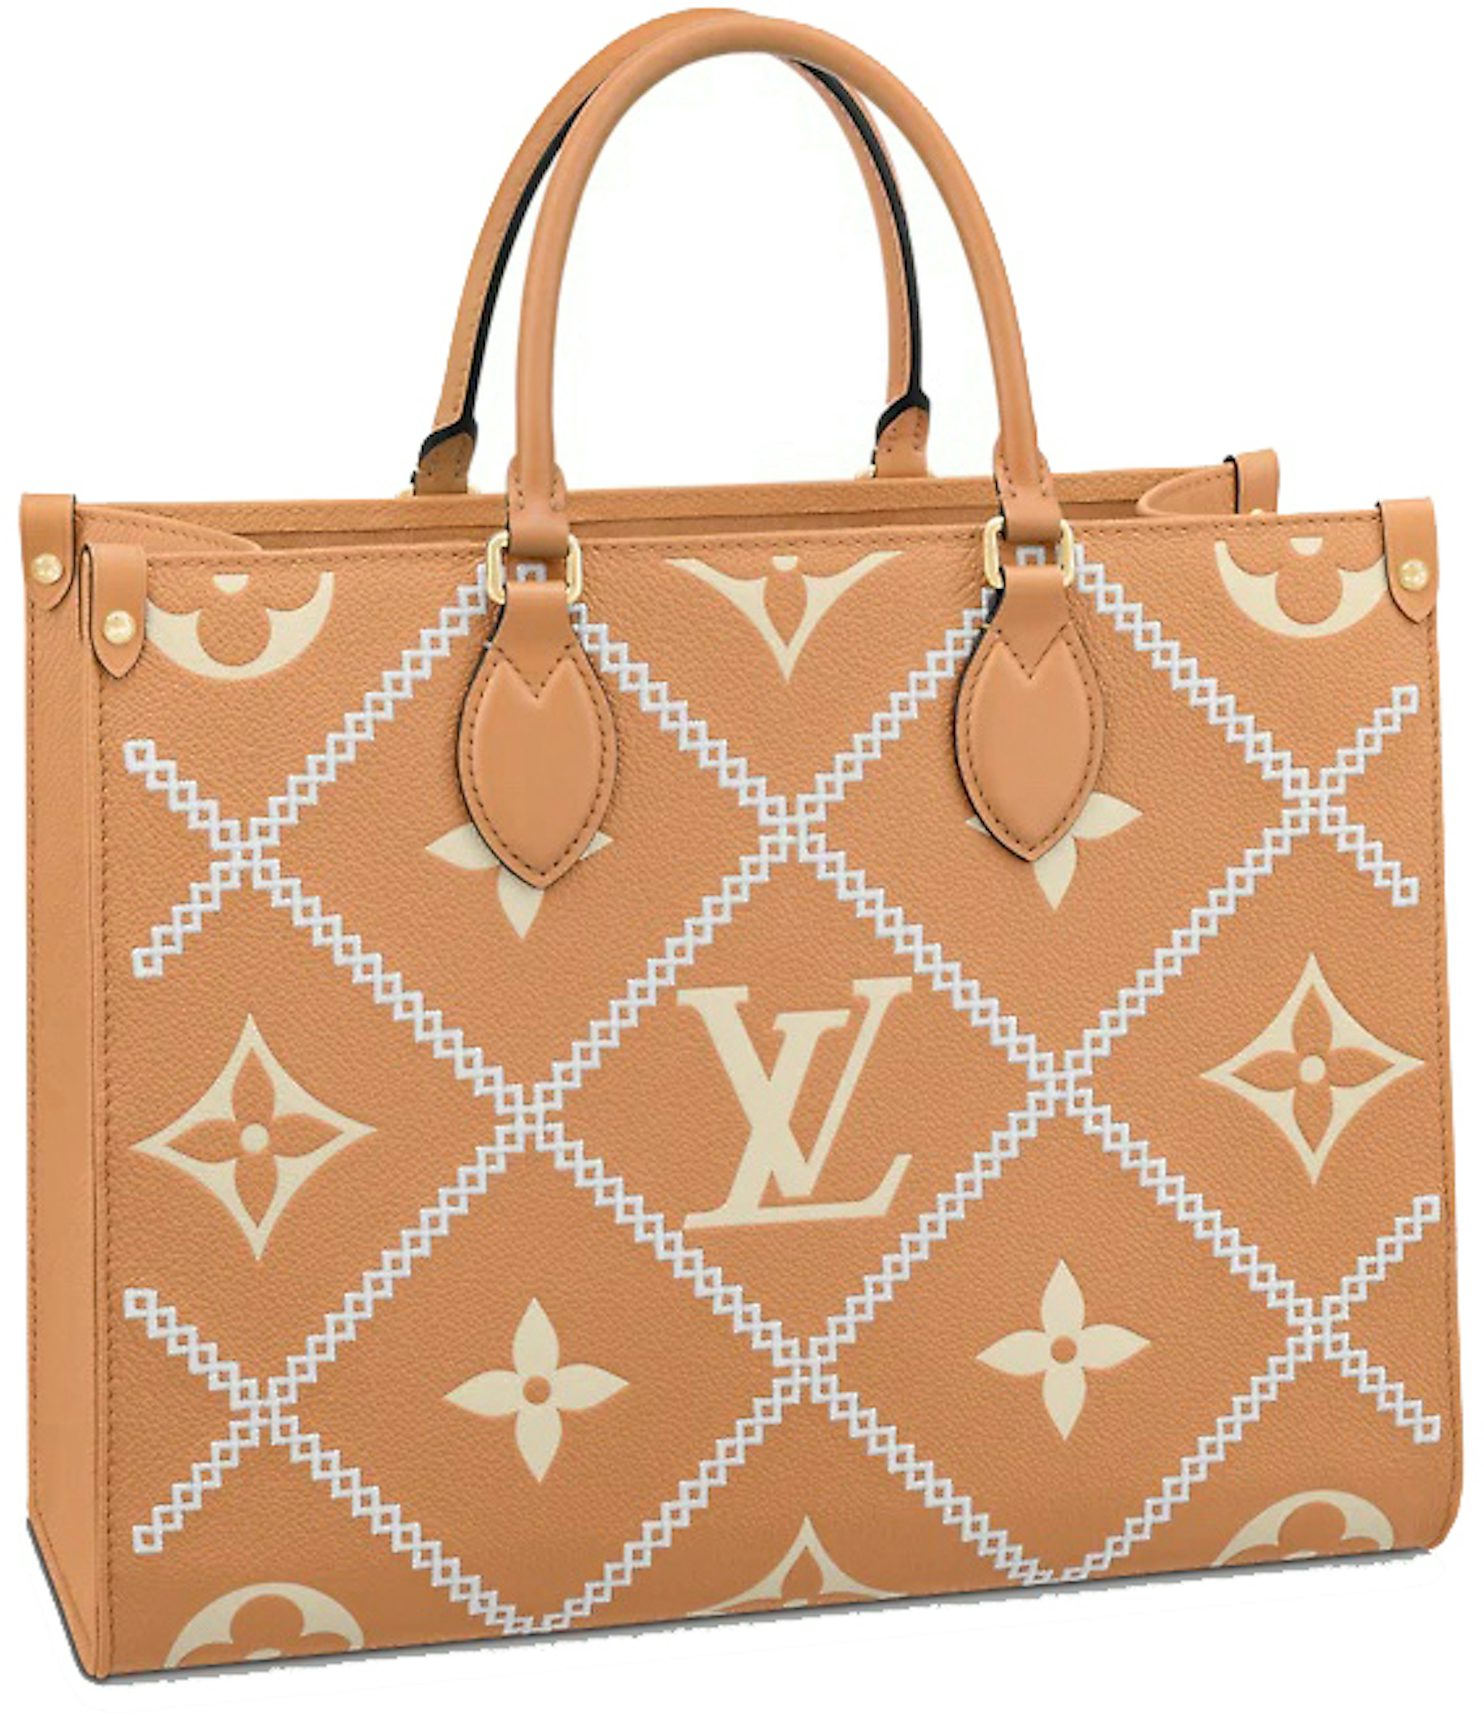 Go Wild: Win the Louis Vuitton Onthego Jungle Bag - StockX News